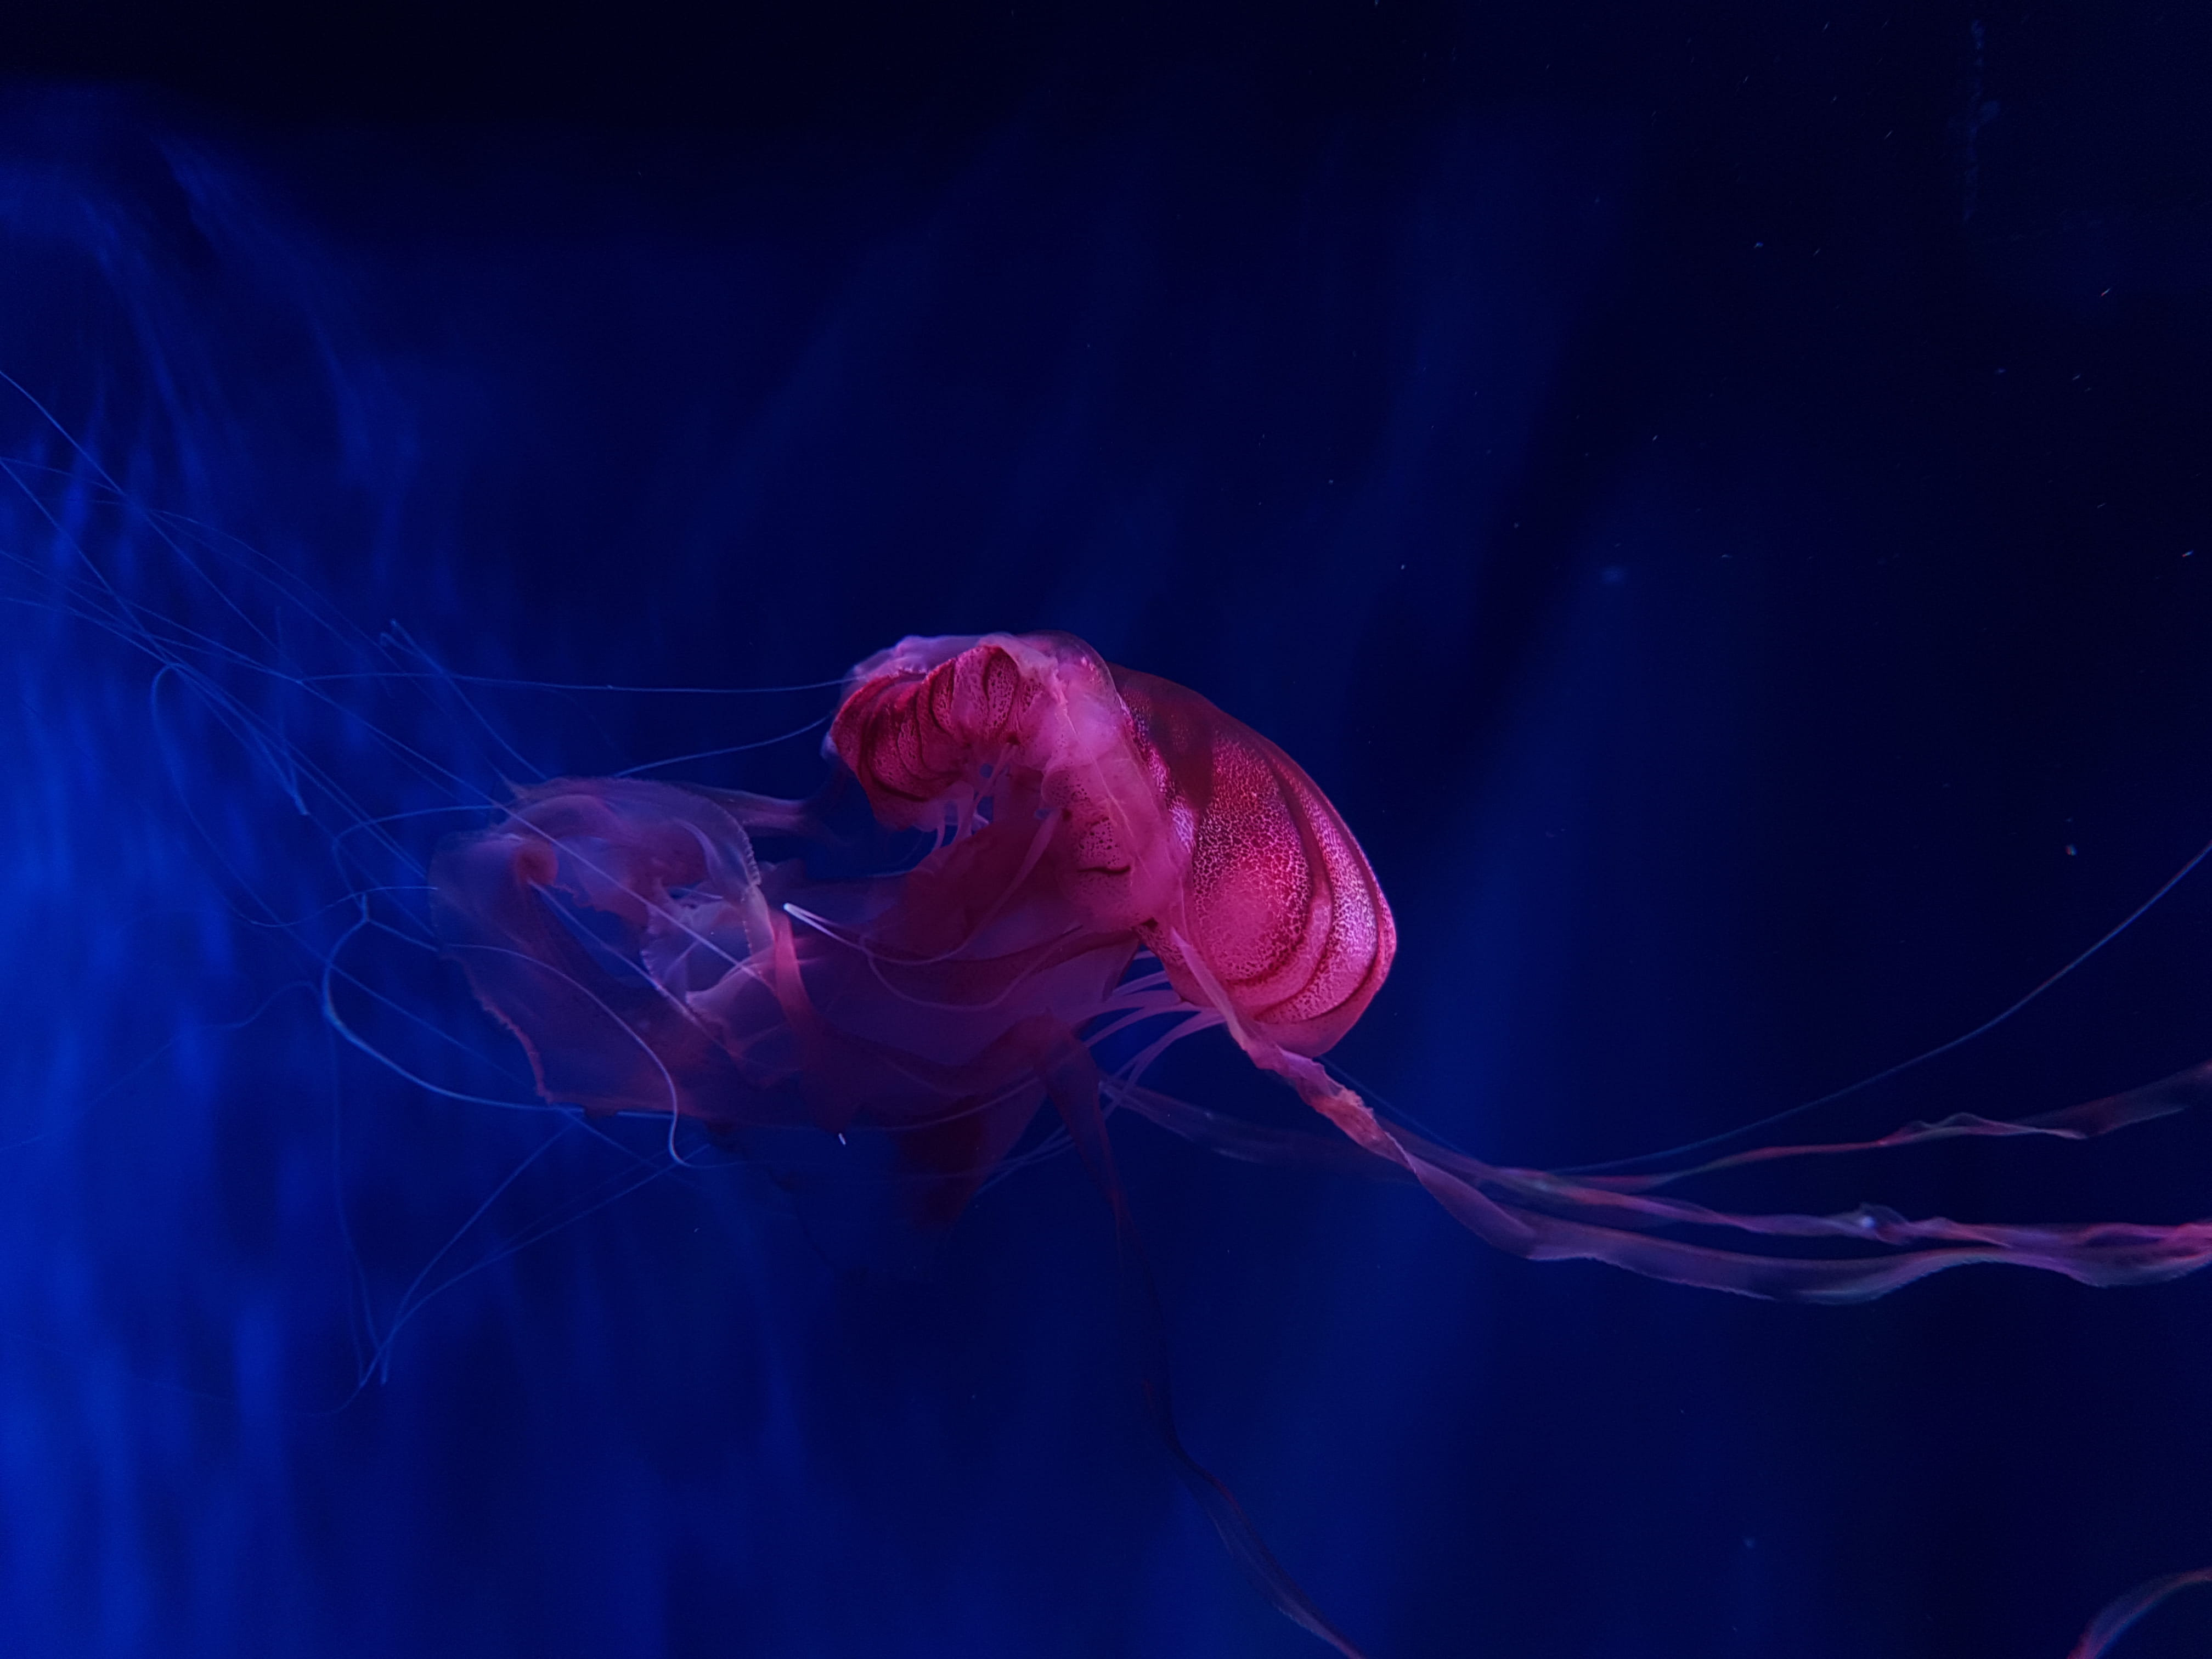 jellyfish underwater photo, aquarium, sea, ocean, blue, red, pink